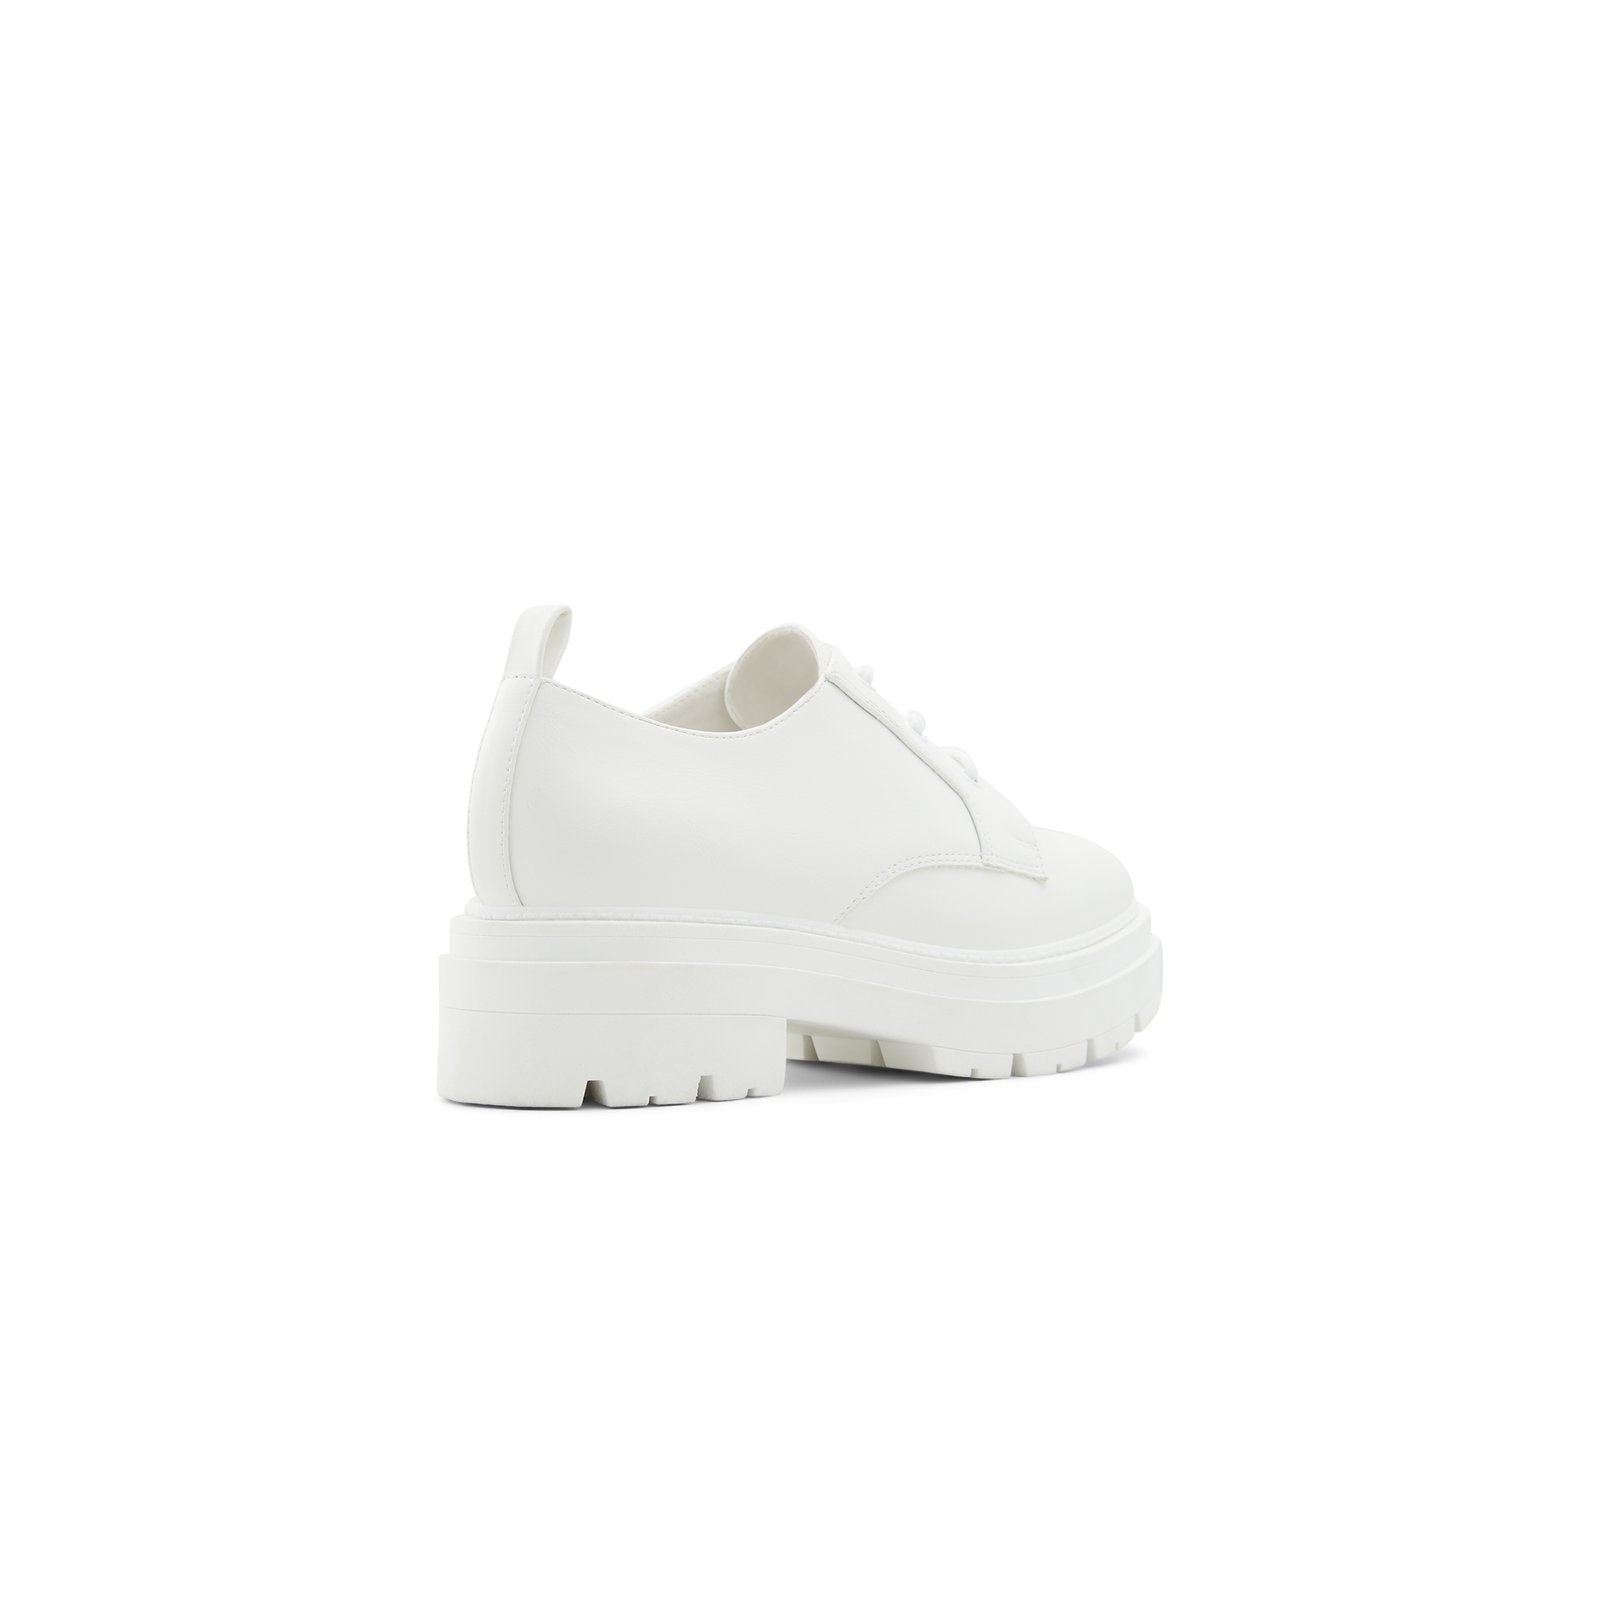 Kyliee Women Shoes - White - CALL IT SPRING KSA